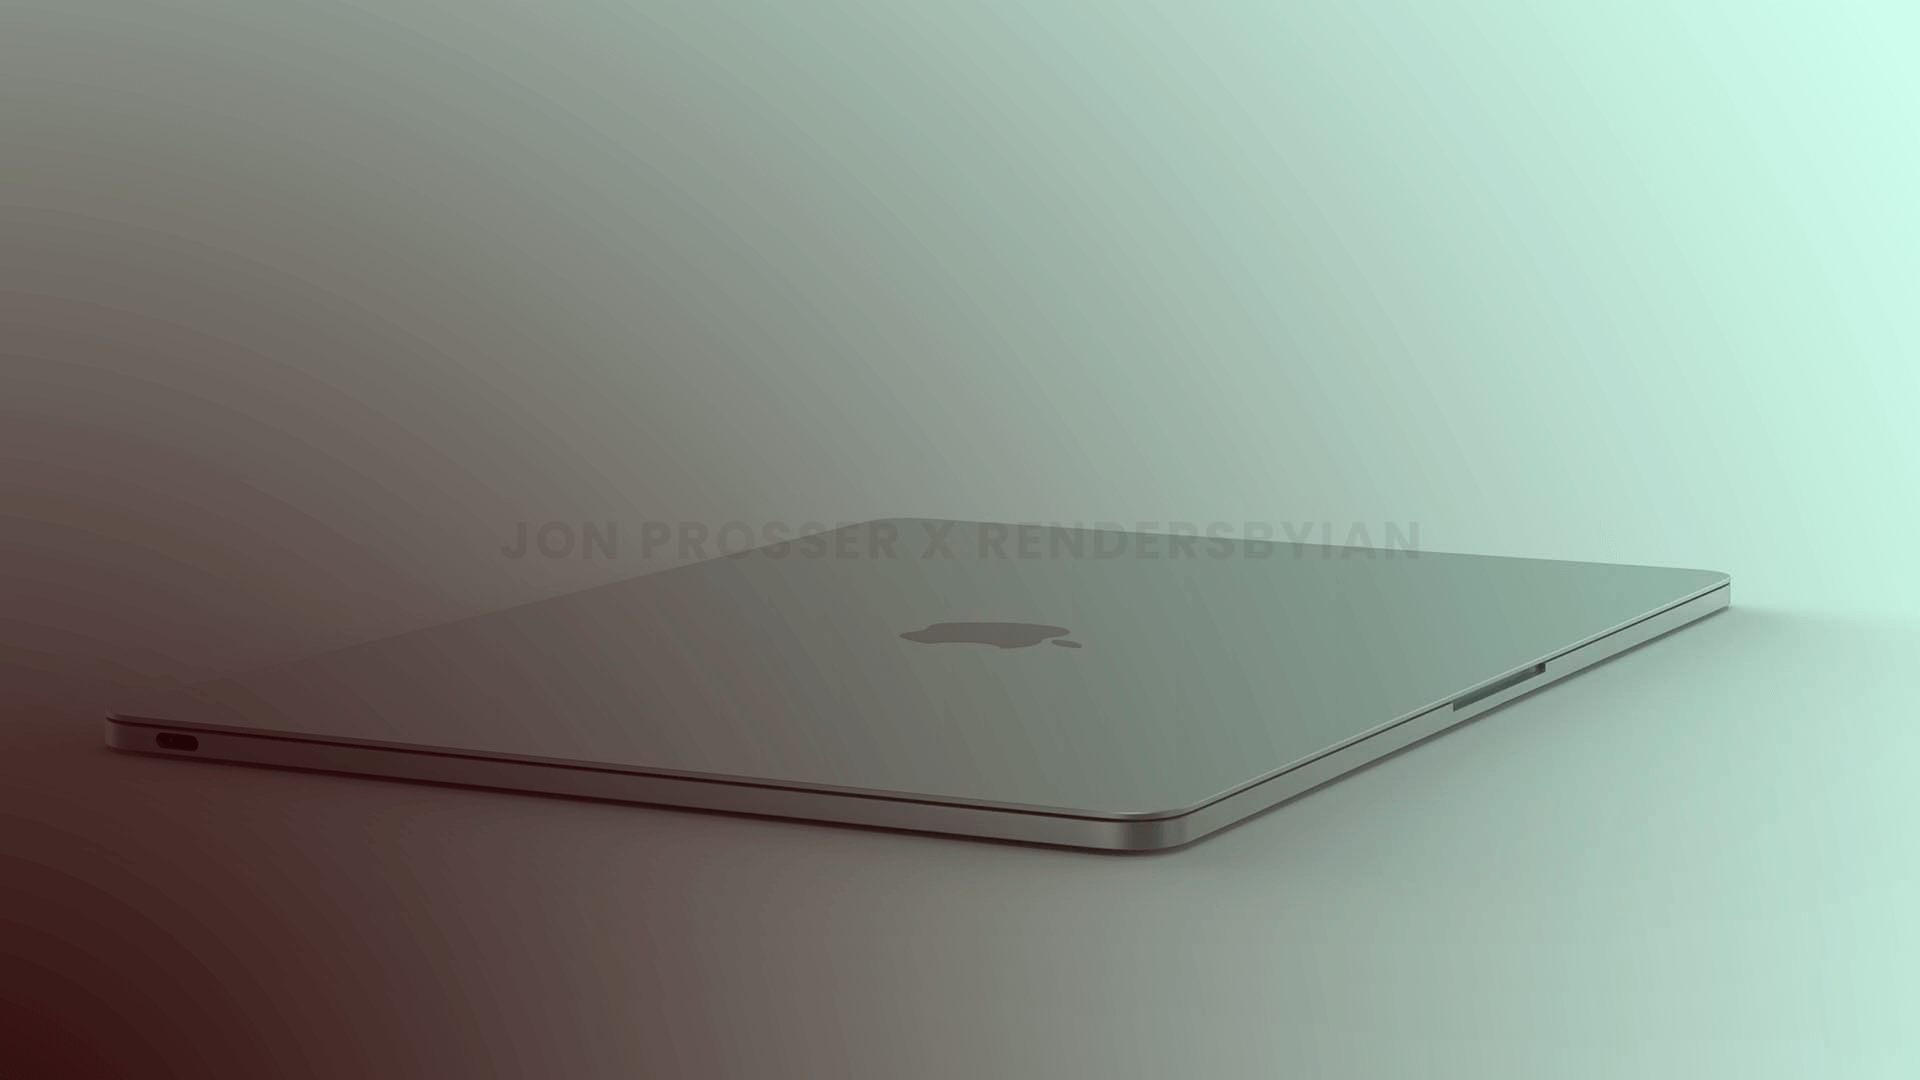 Date new macbook release air 2021 New MacBook